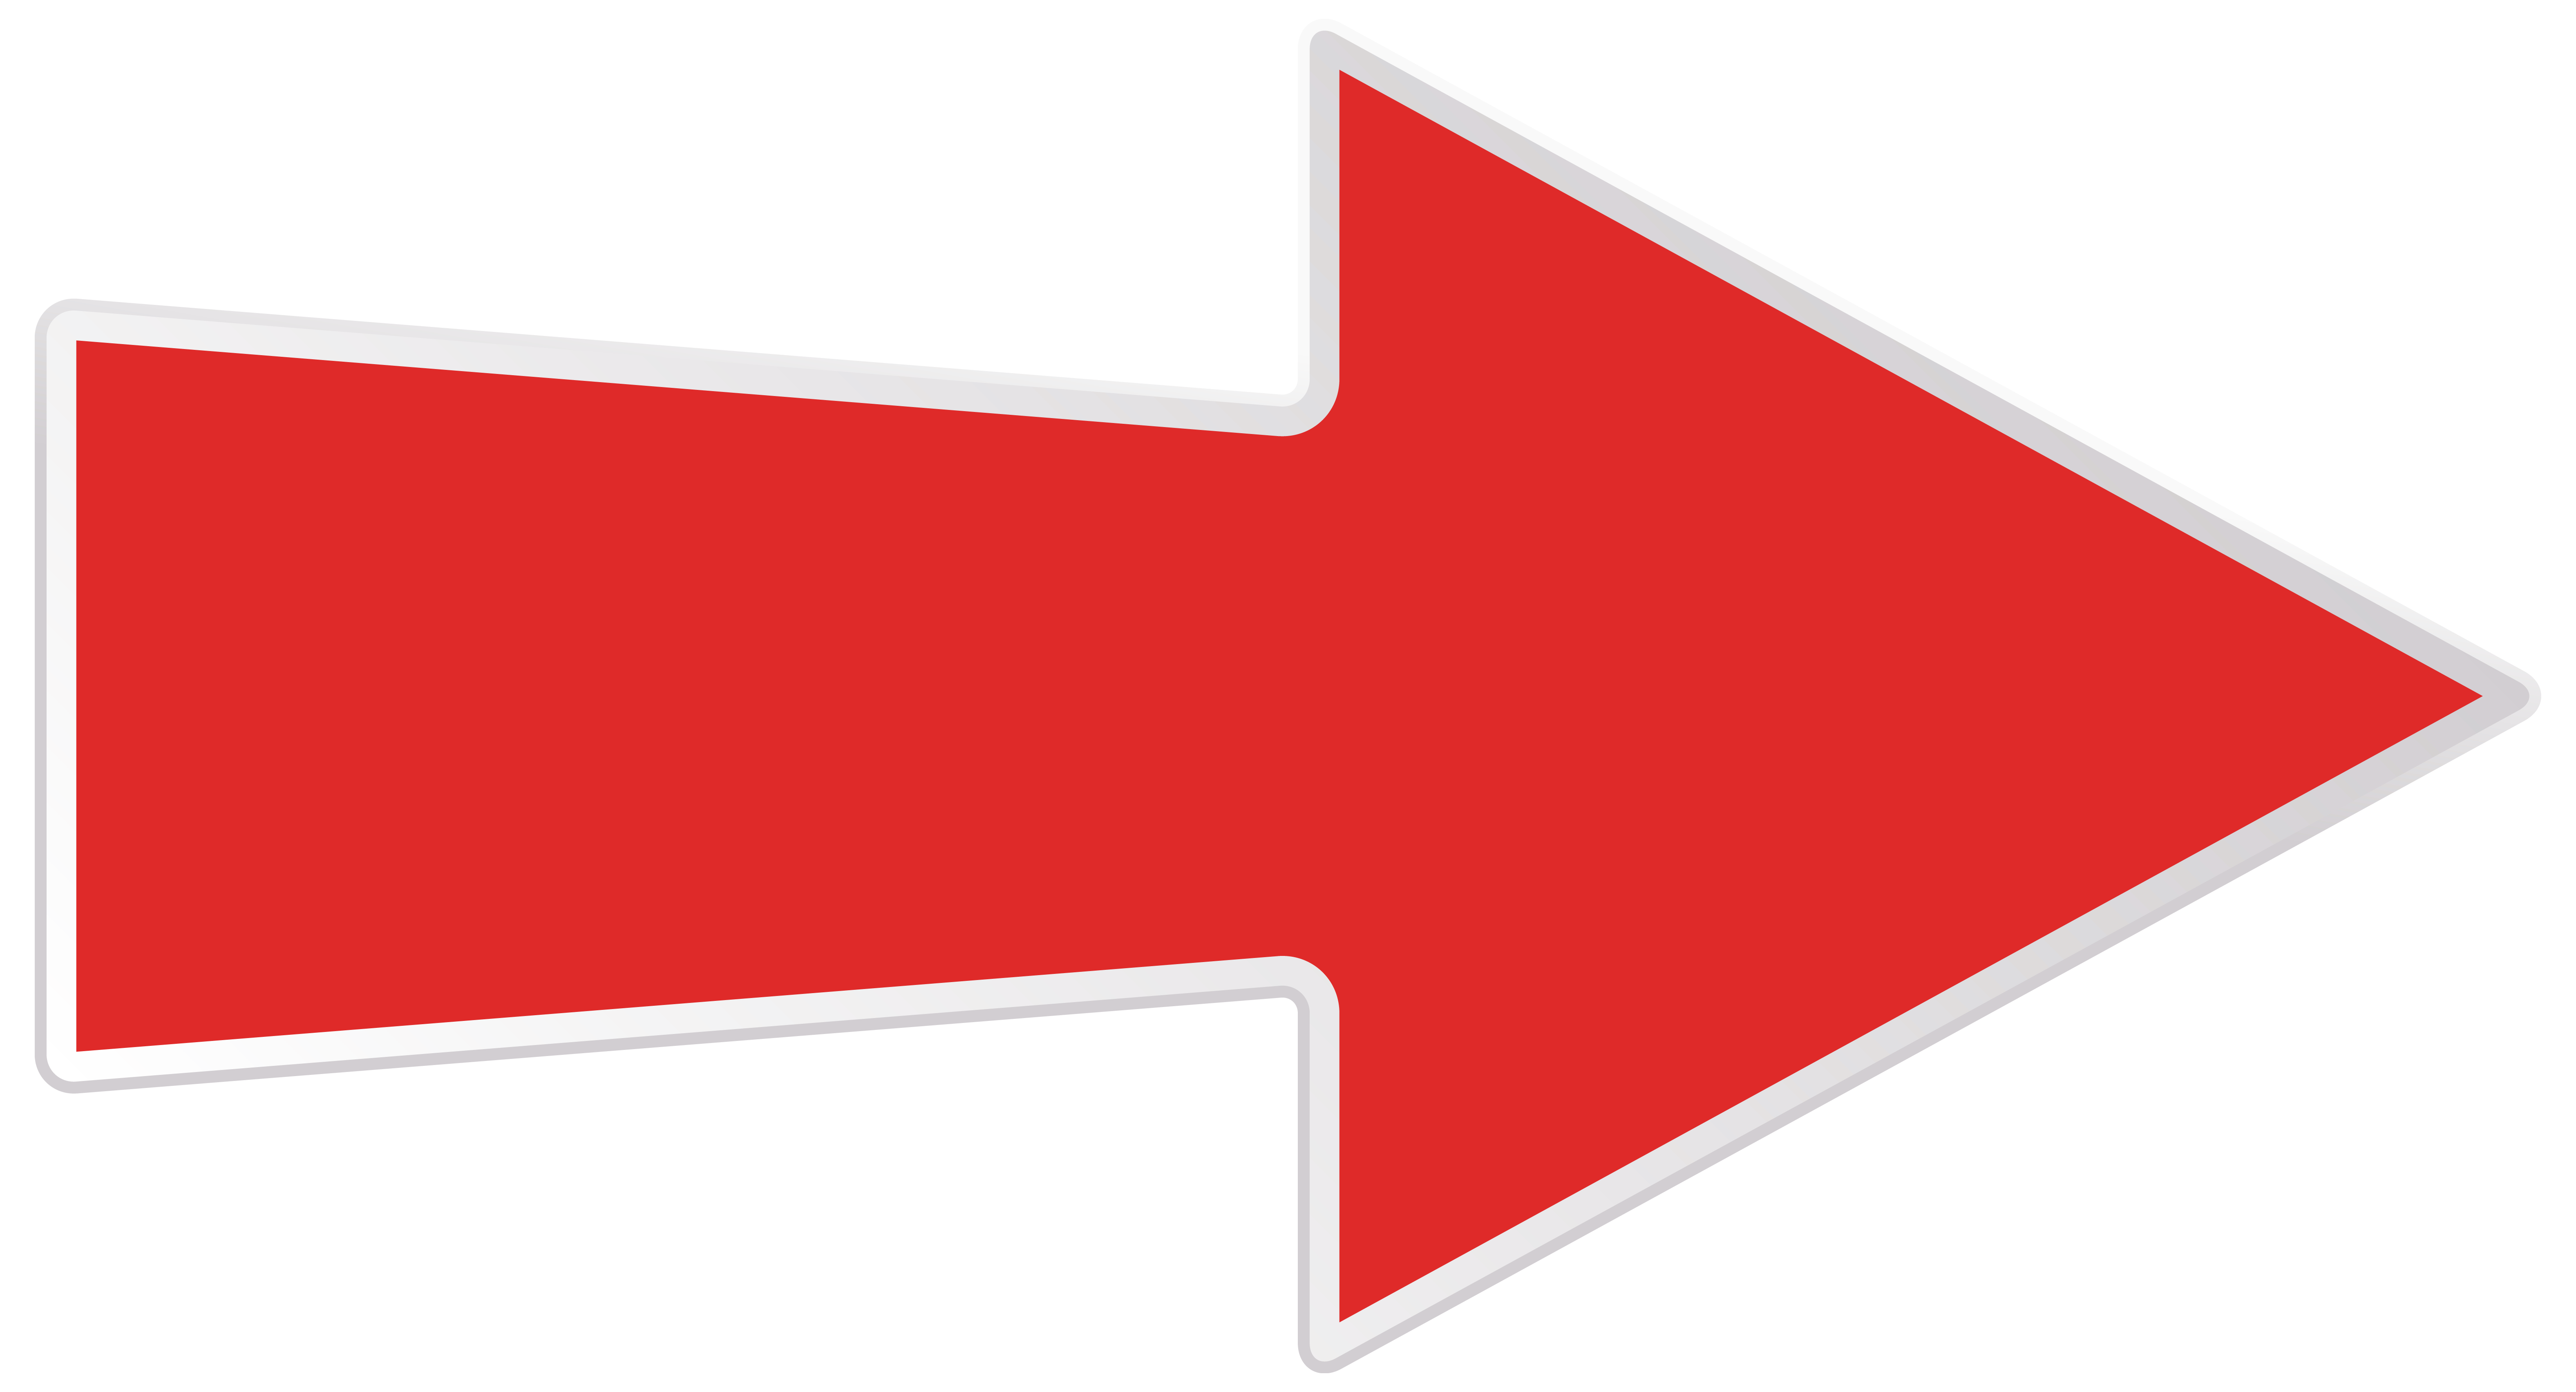 Red Down Arrow Clip Art